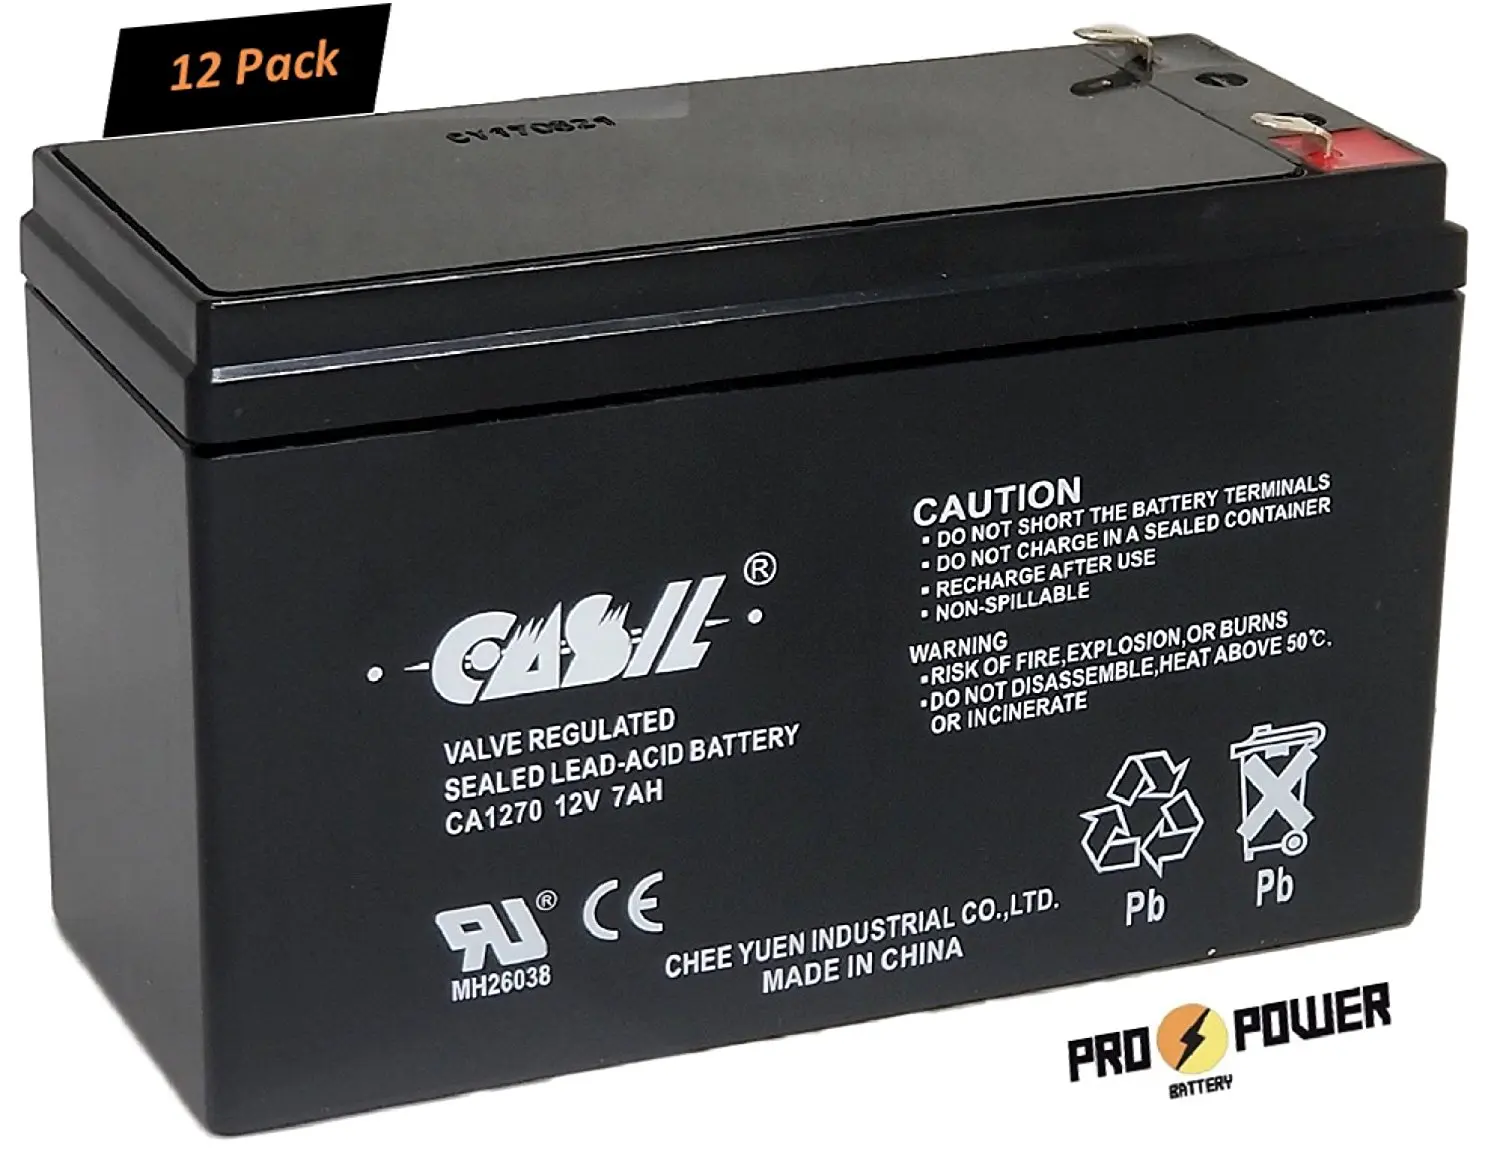 7 ah 12v. Powerman Valve regulated Sealed lead-acid Battery ca1270 12v 7ah. 12v 7ah Sealed Battery. Powerman Valve regulated Sealed lead-acid Battery ca1270 12v 7ah p. Casil 12v 27 Ah.